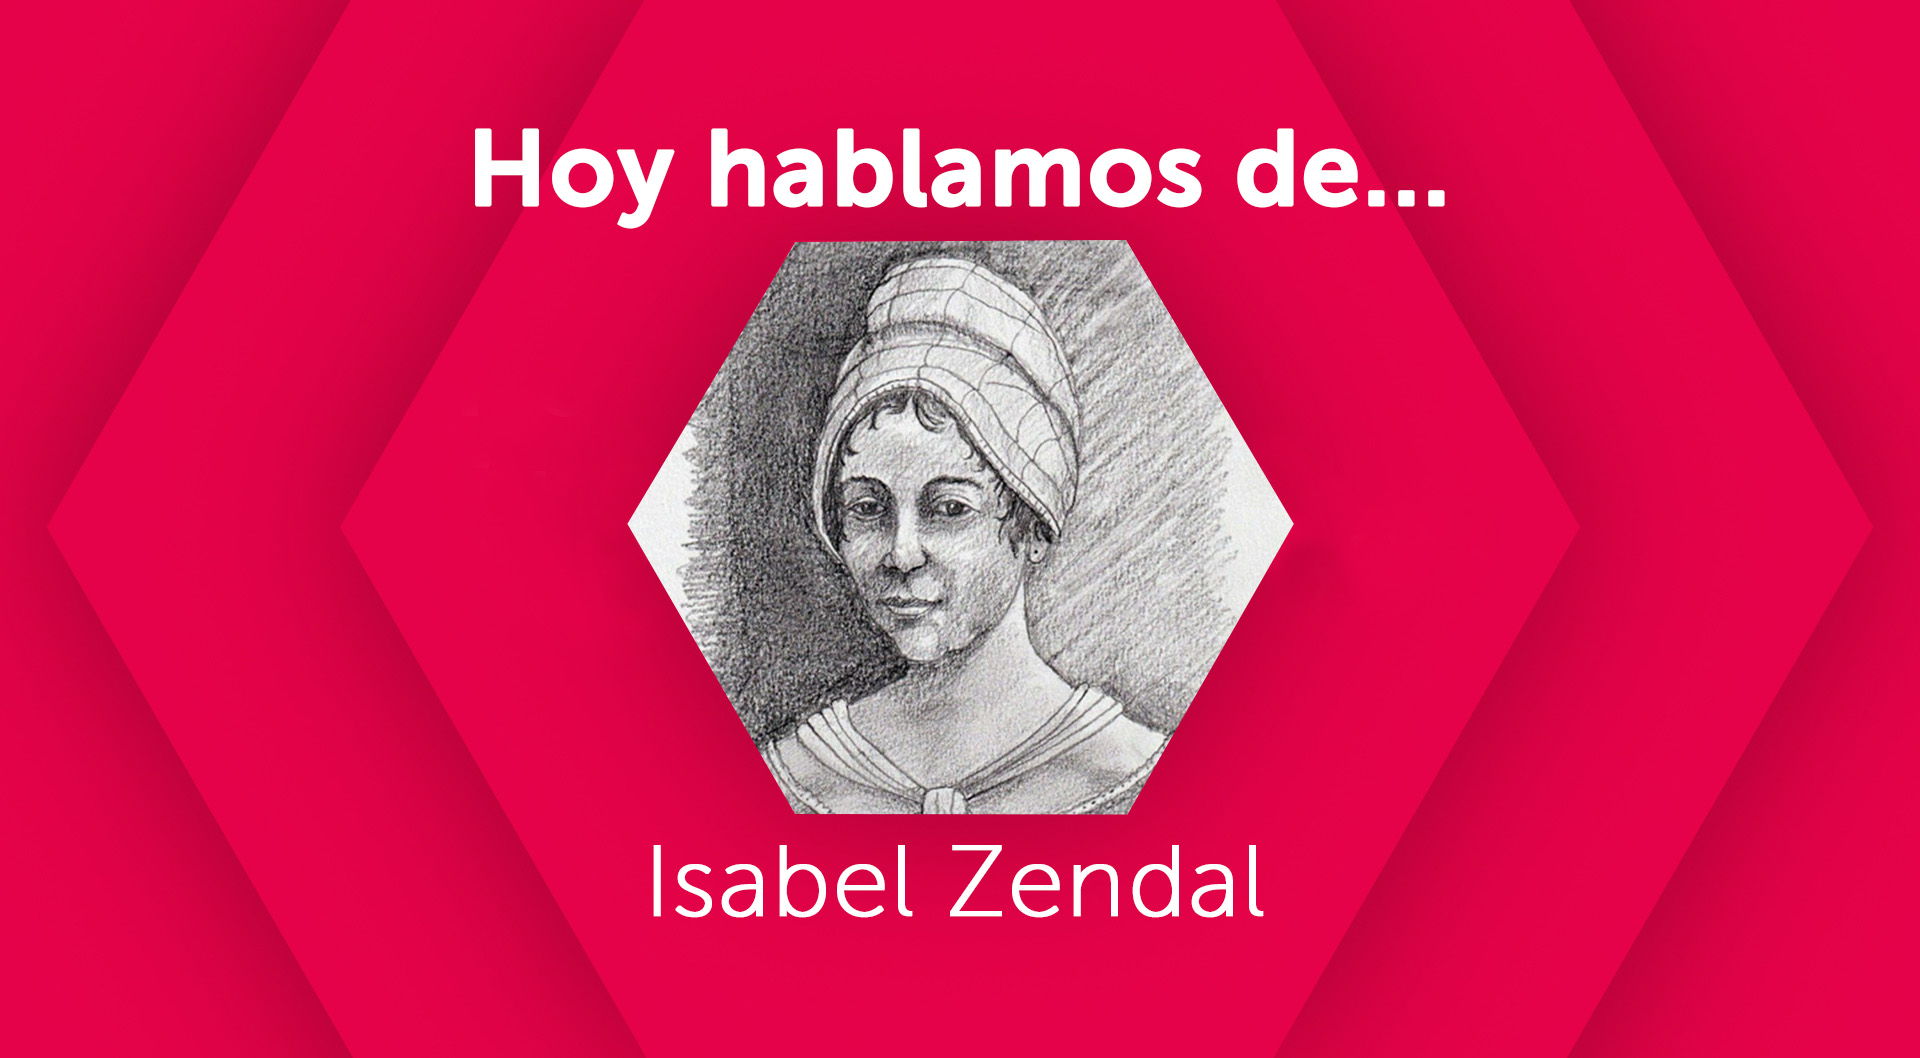 Hoy hablamos de Isabel Zendal